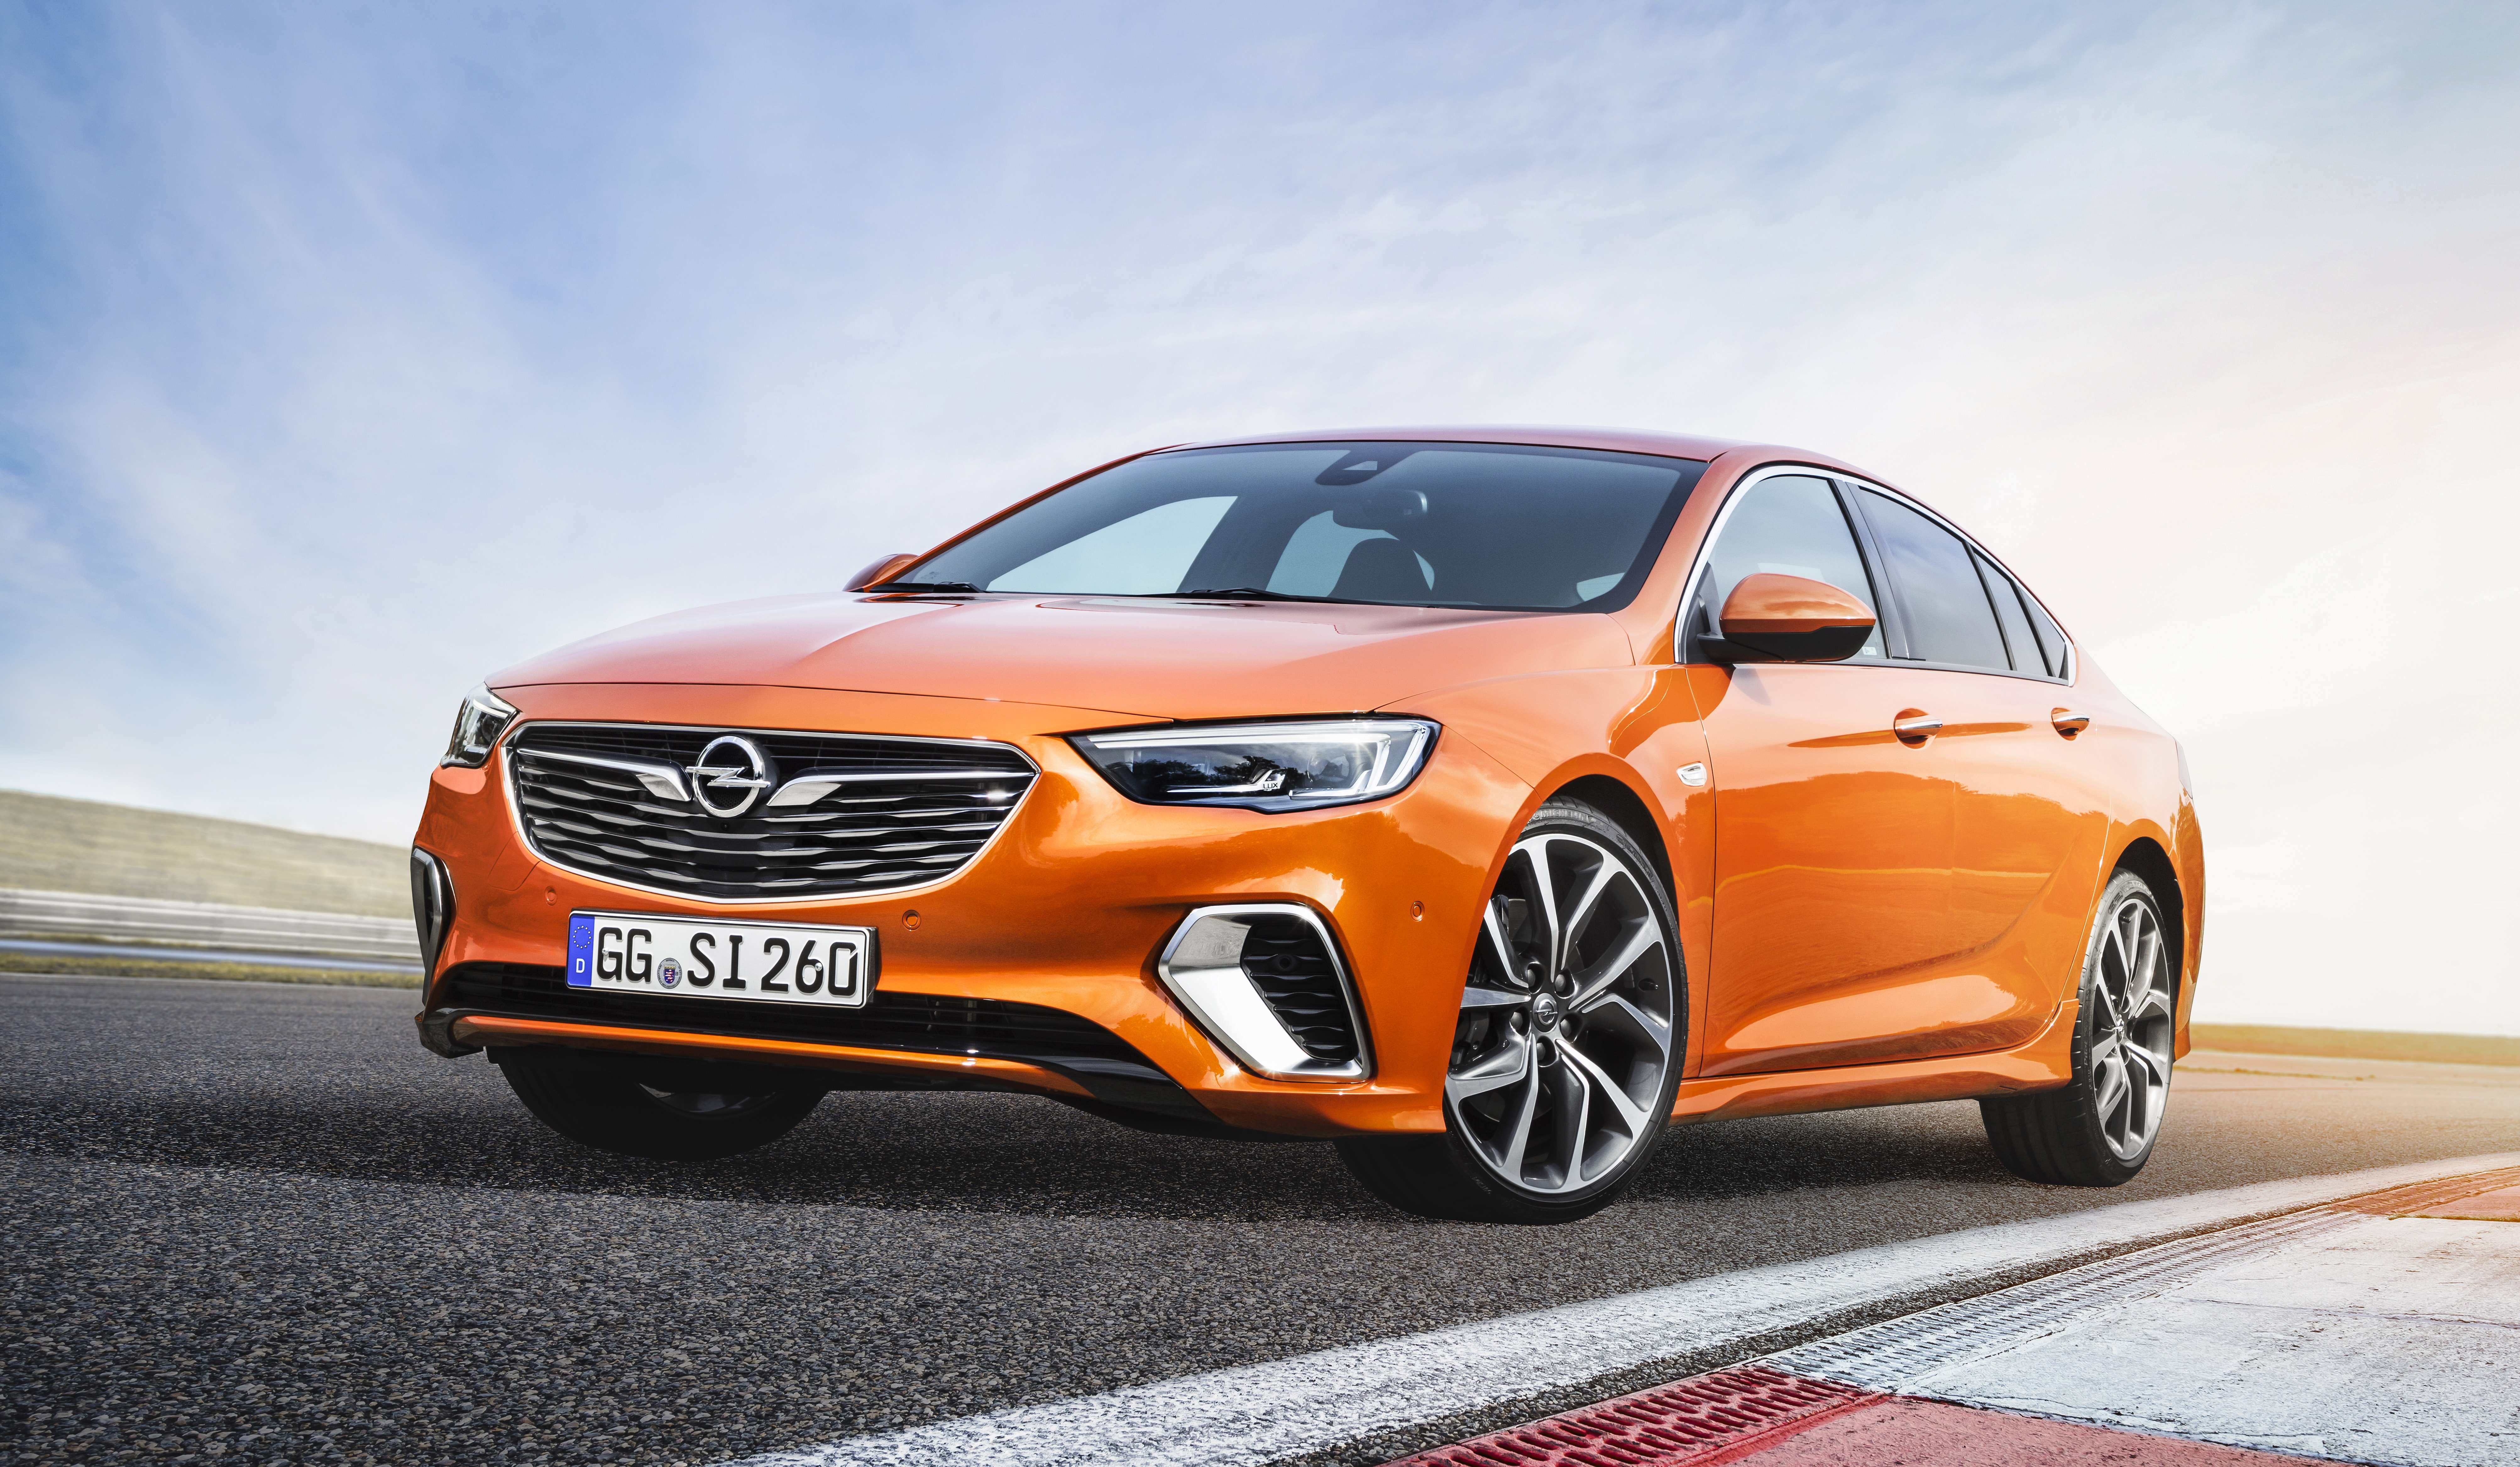 Opel Insignia vybojoval titul "All-Wheel Drive Car Of The Year 2019"